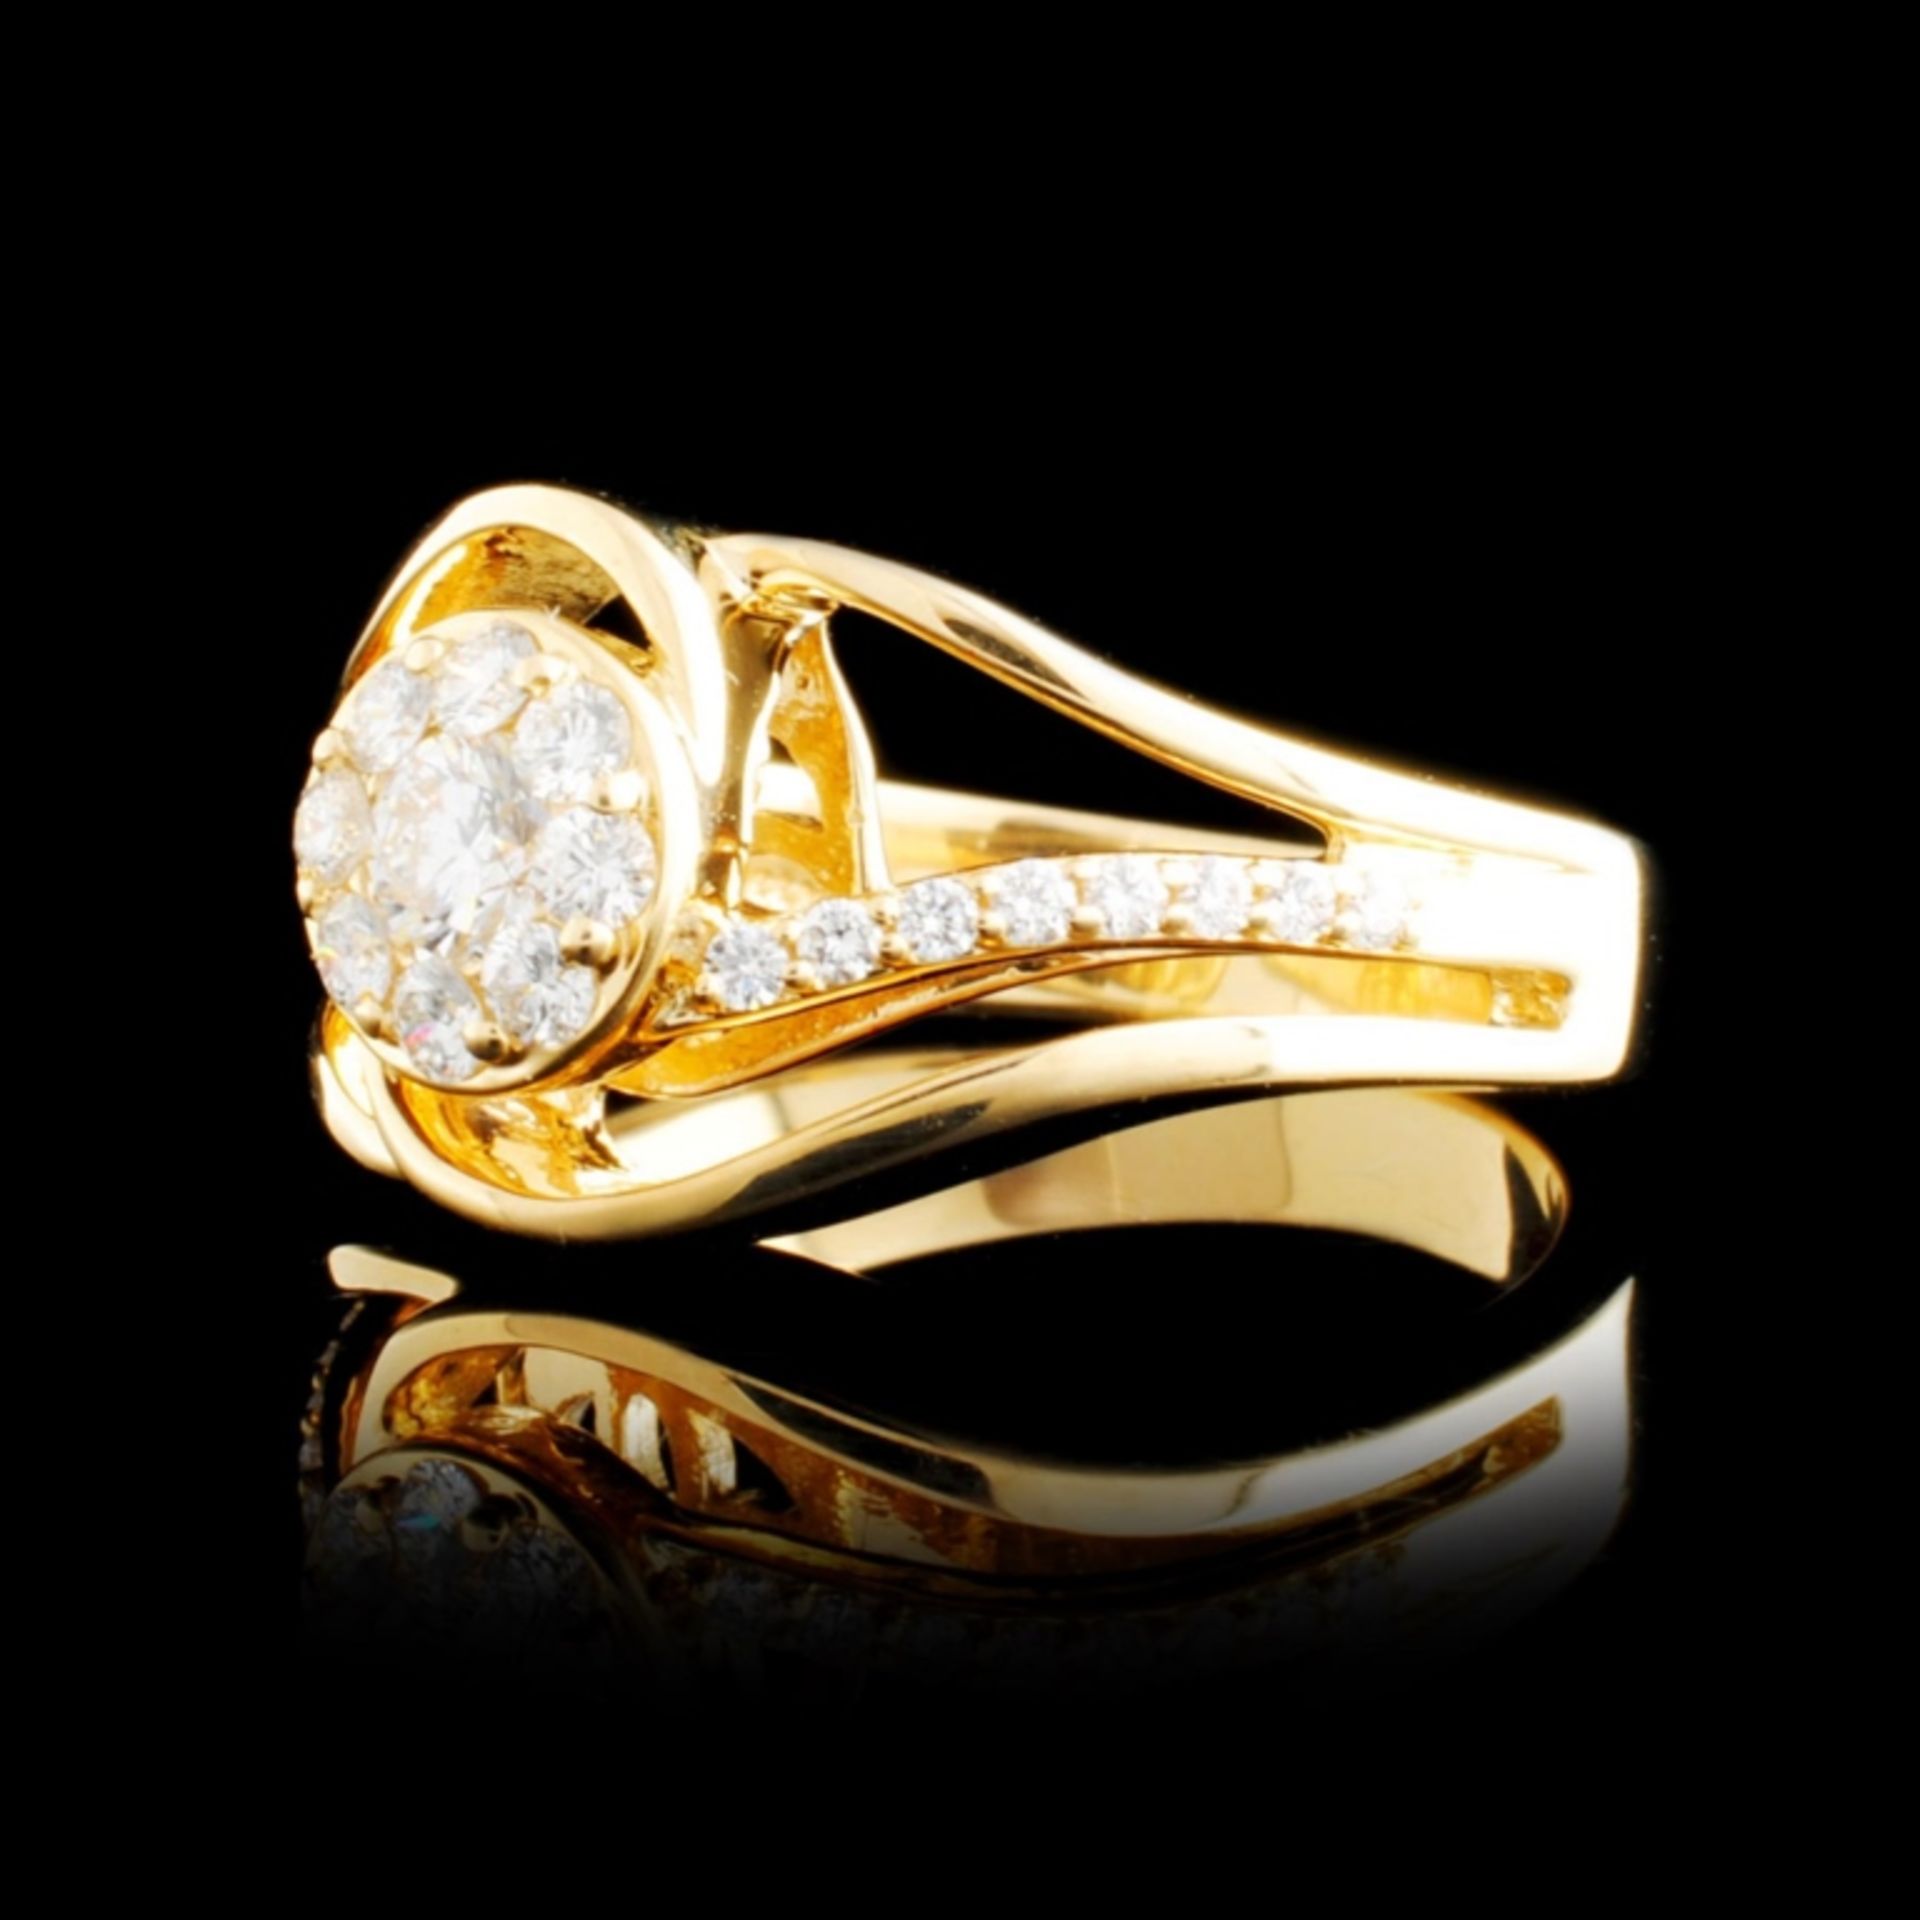 14K Gold 0.52ctw Diamond Ring - Image 2 of 5